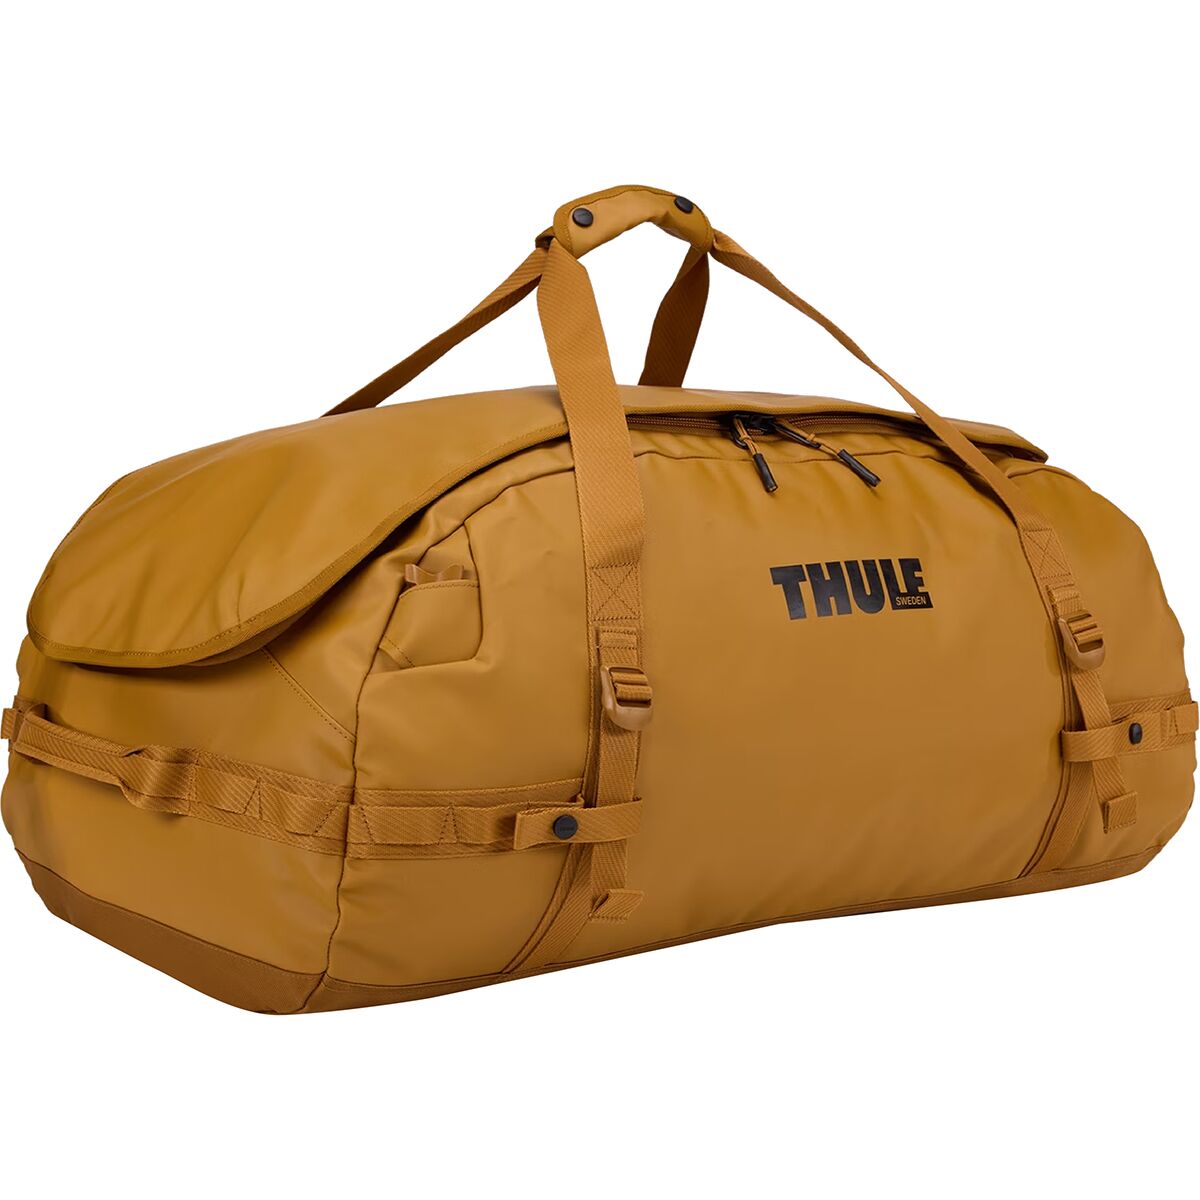 Спортивная сумка chasm 90 л Thule, коричневый спортивная сумка chasm 90 л thule коричневый